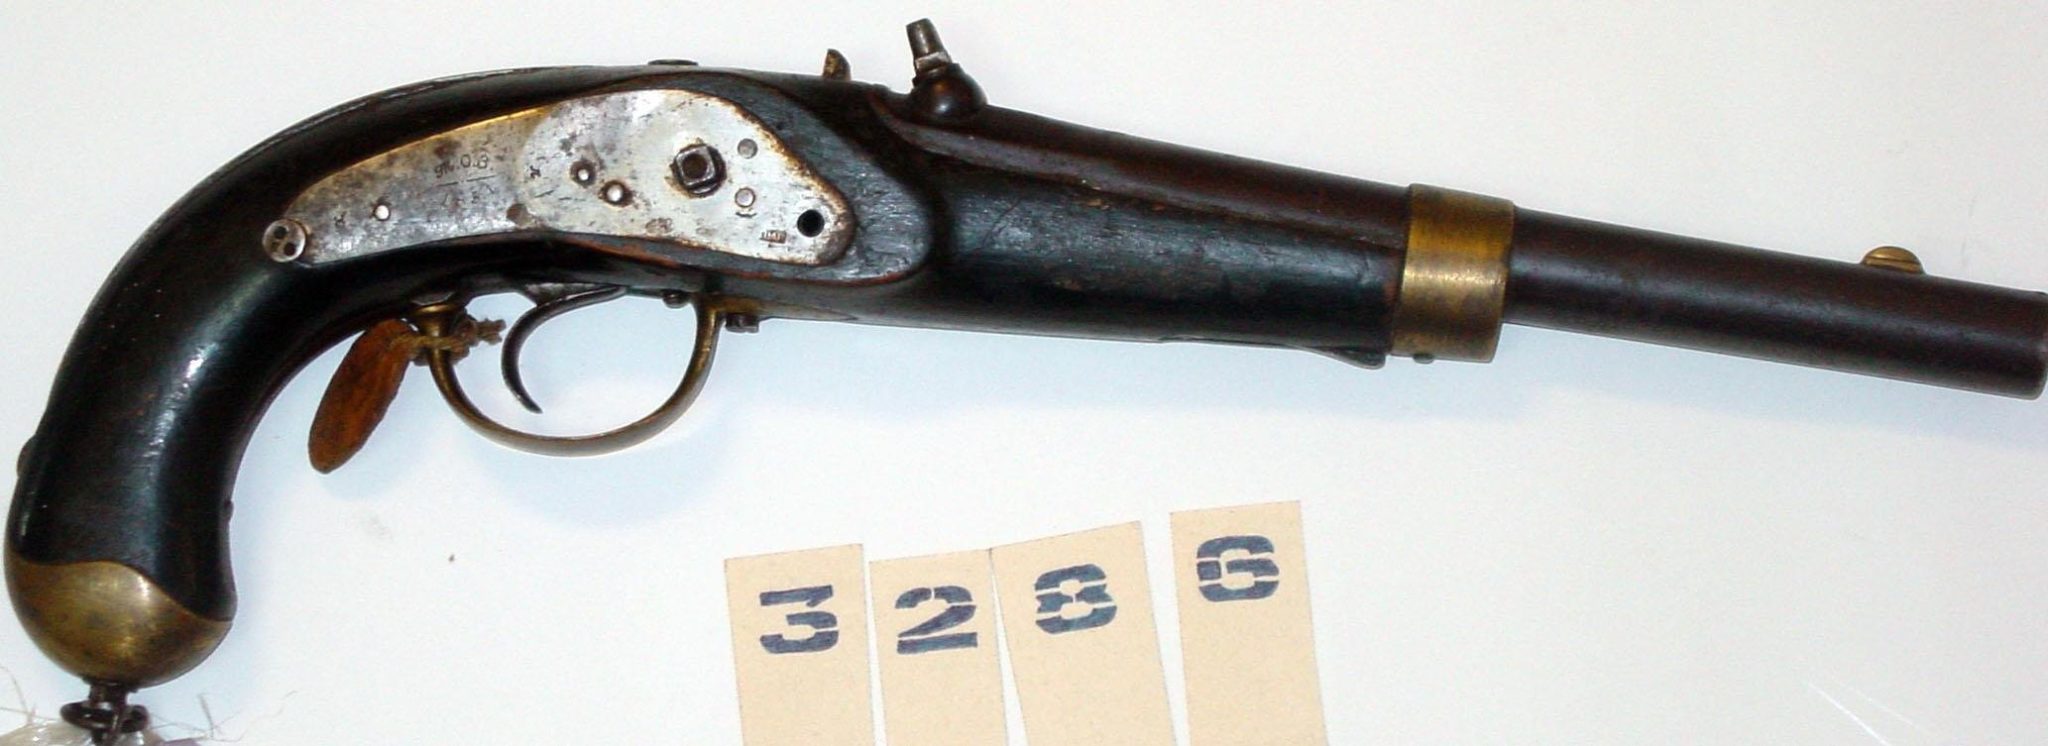 АОКМ КП-3286 Пистолет солдатский образца 1848 года. №1524.